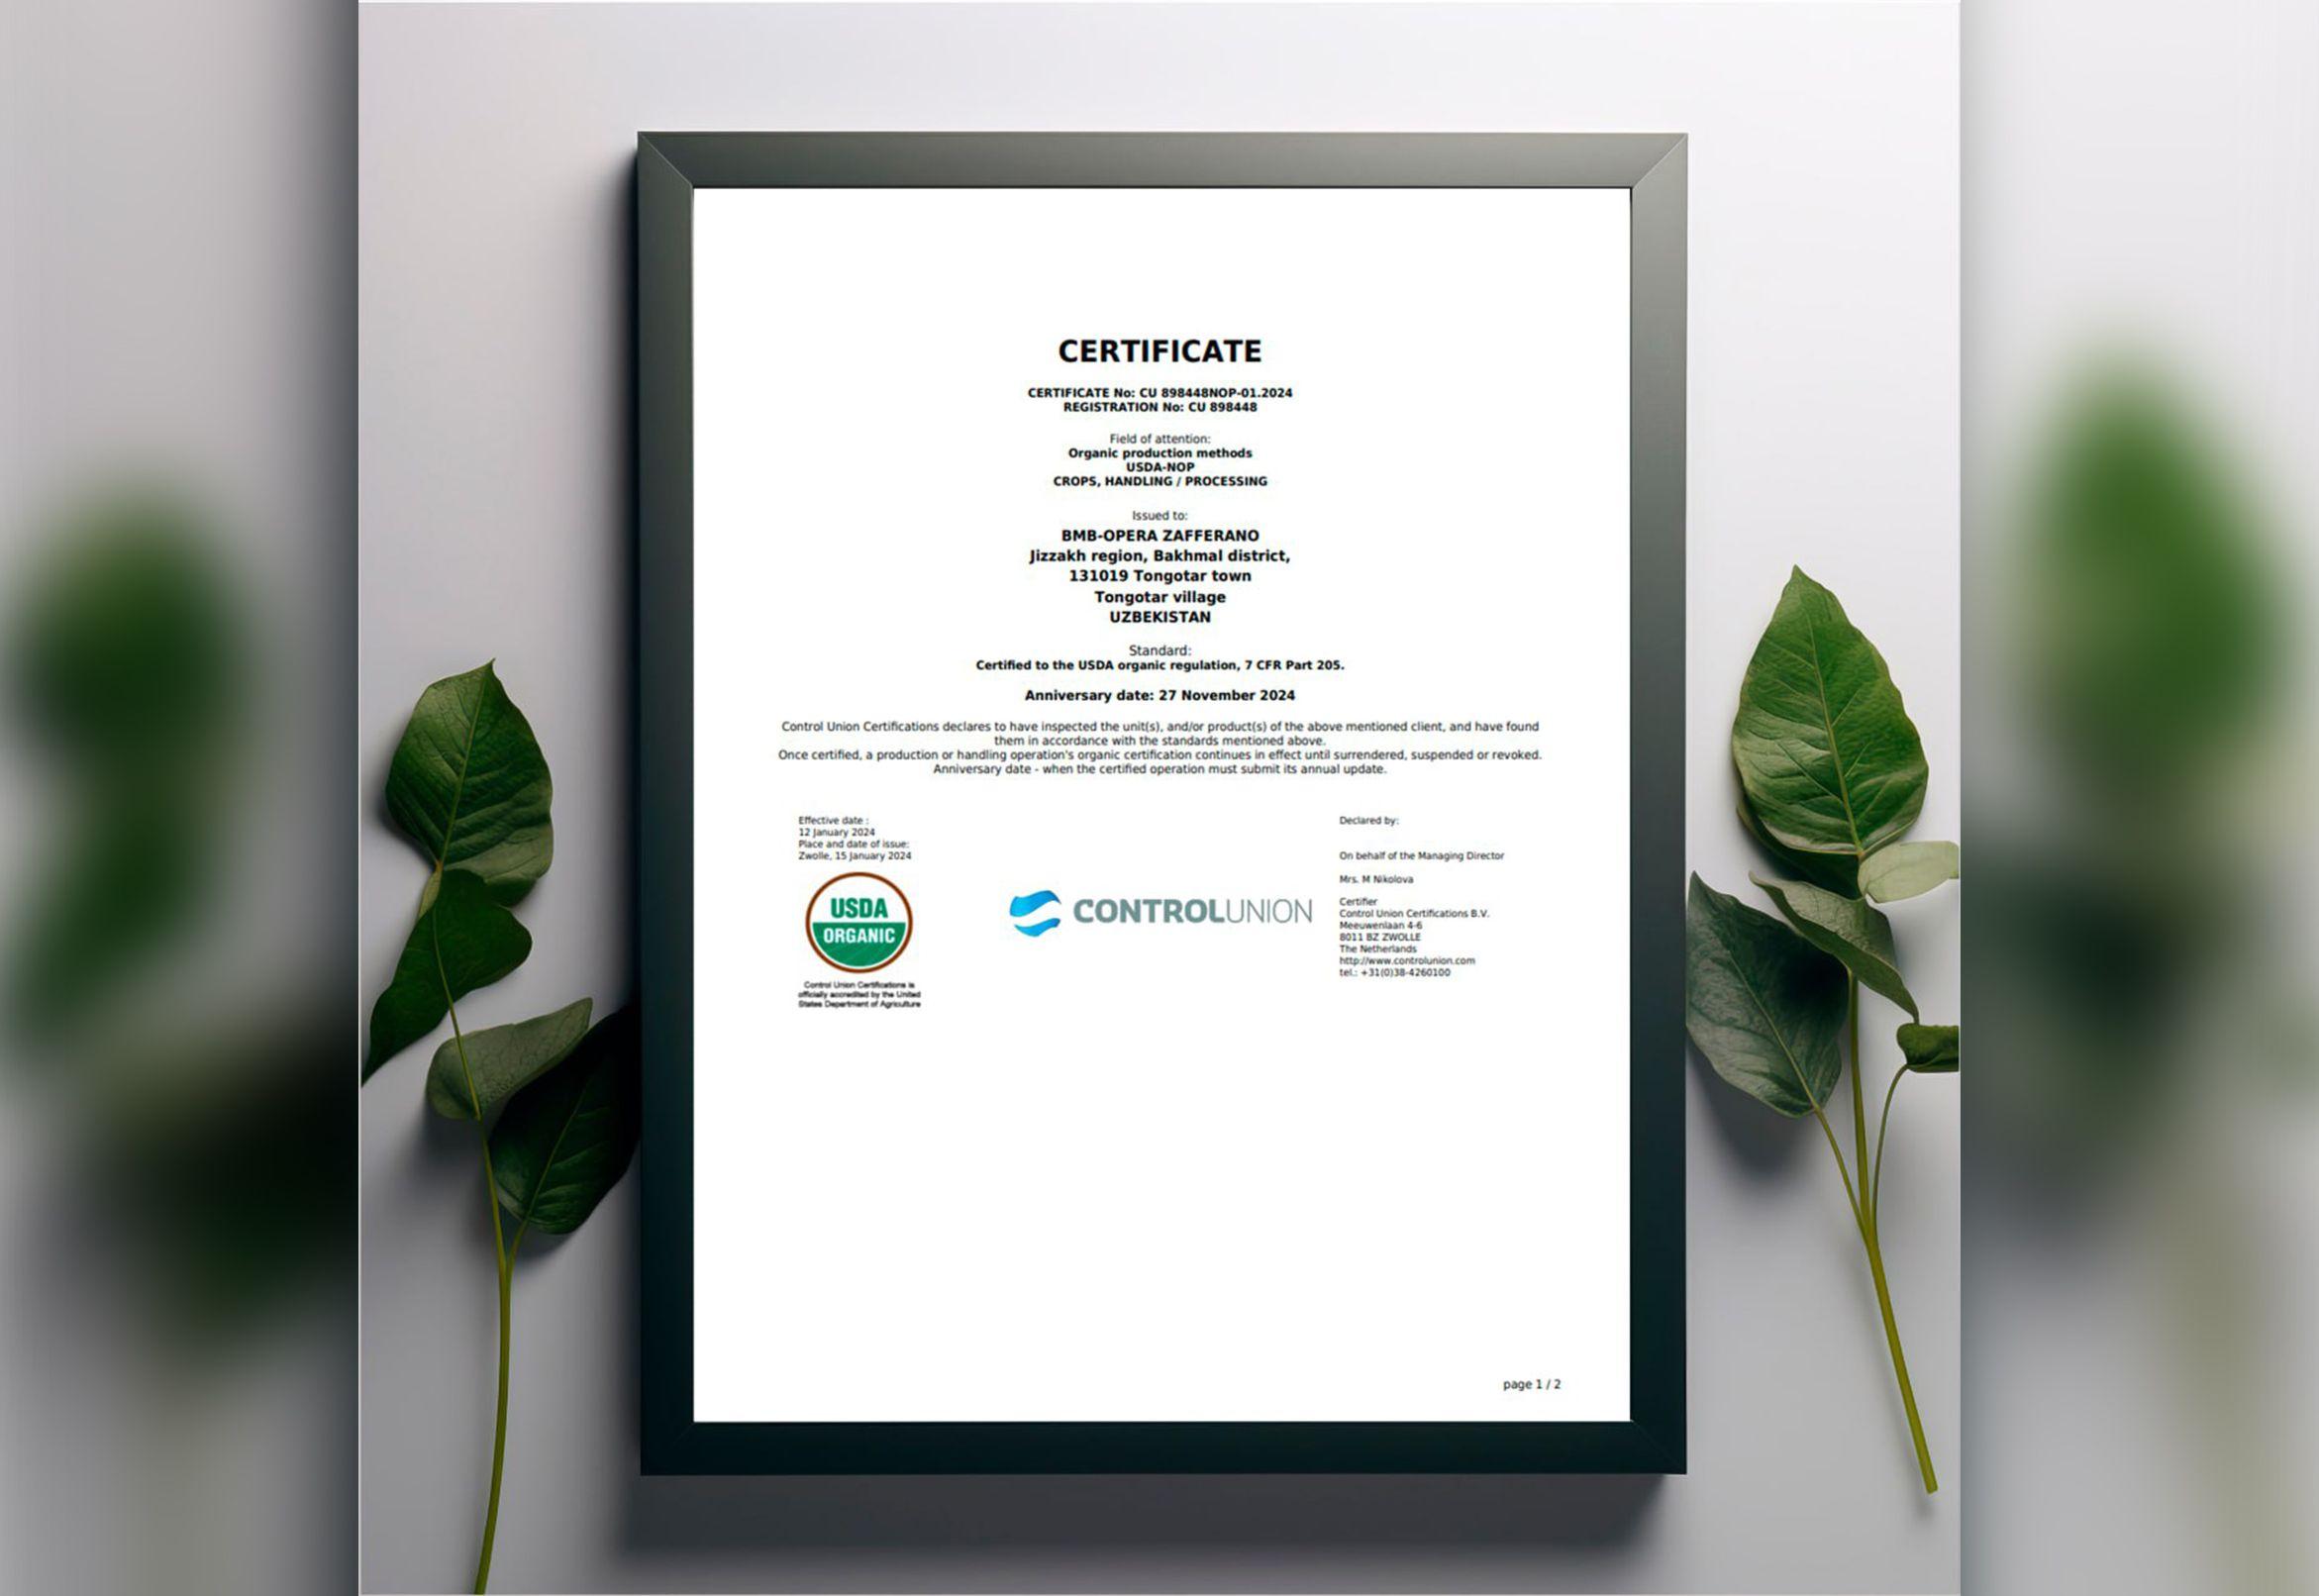 BMB Za'faron has received USDA Organic certification